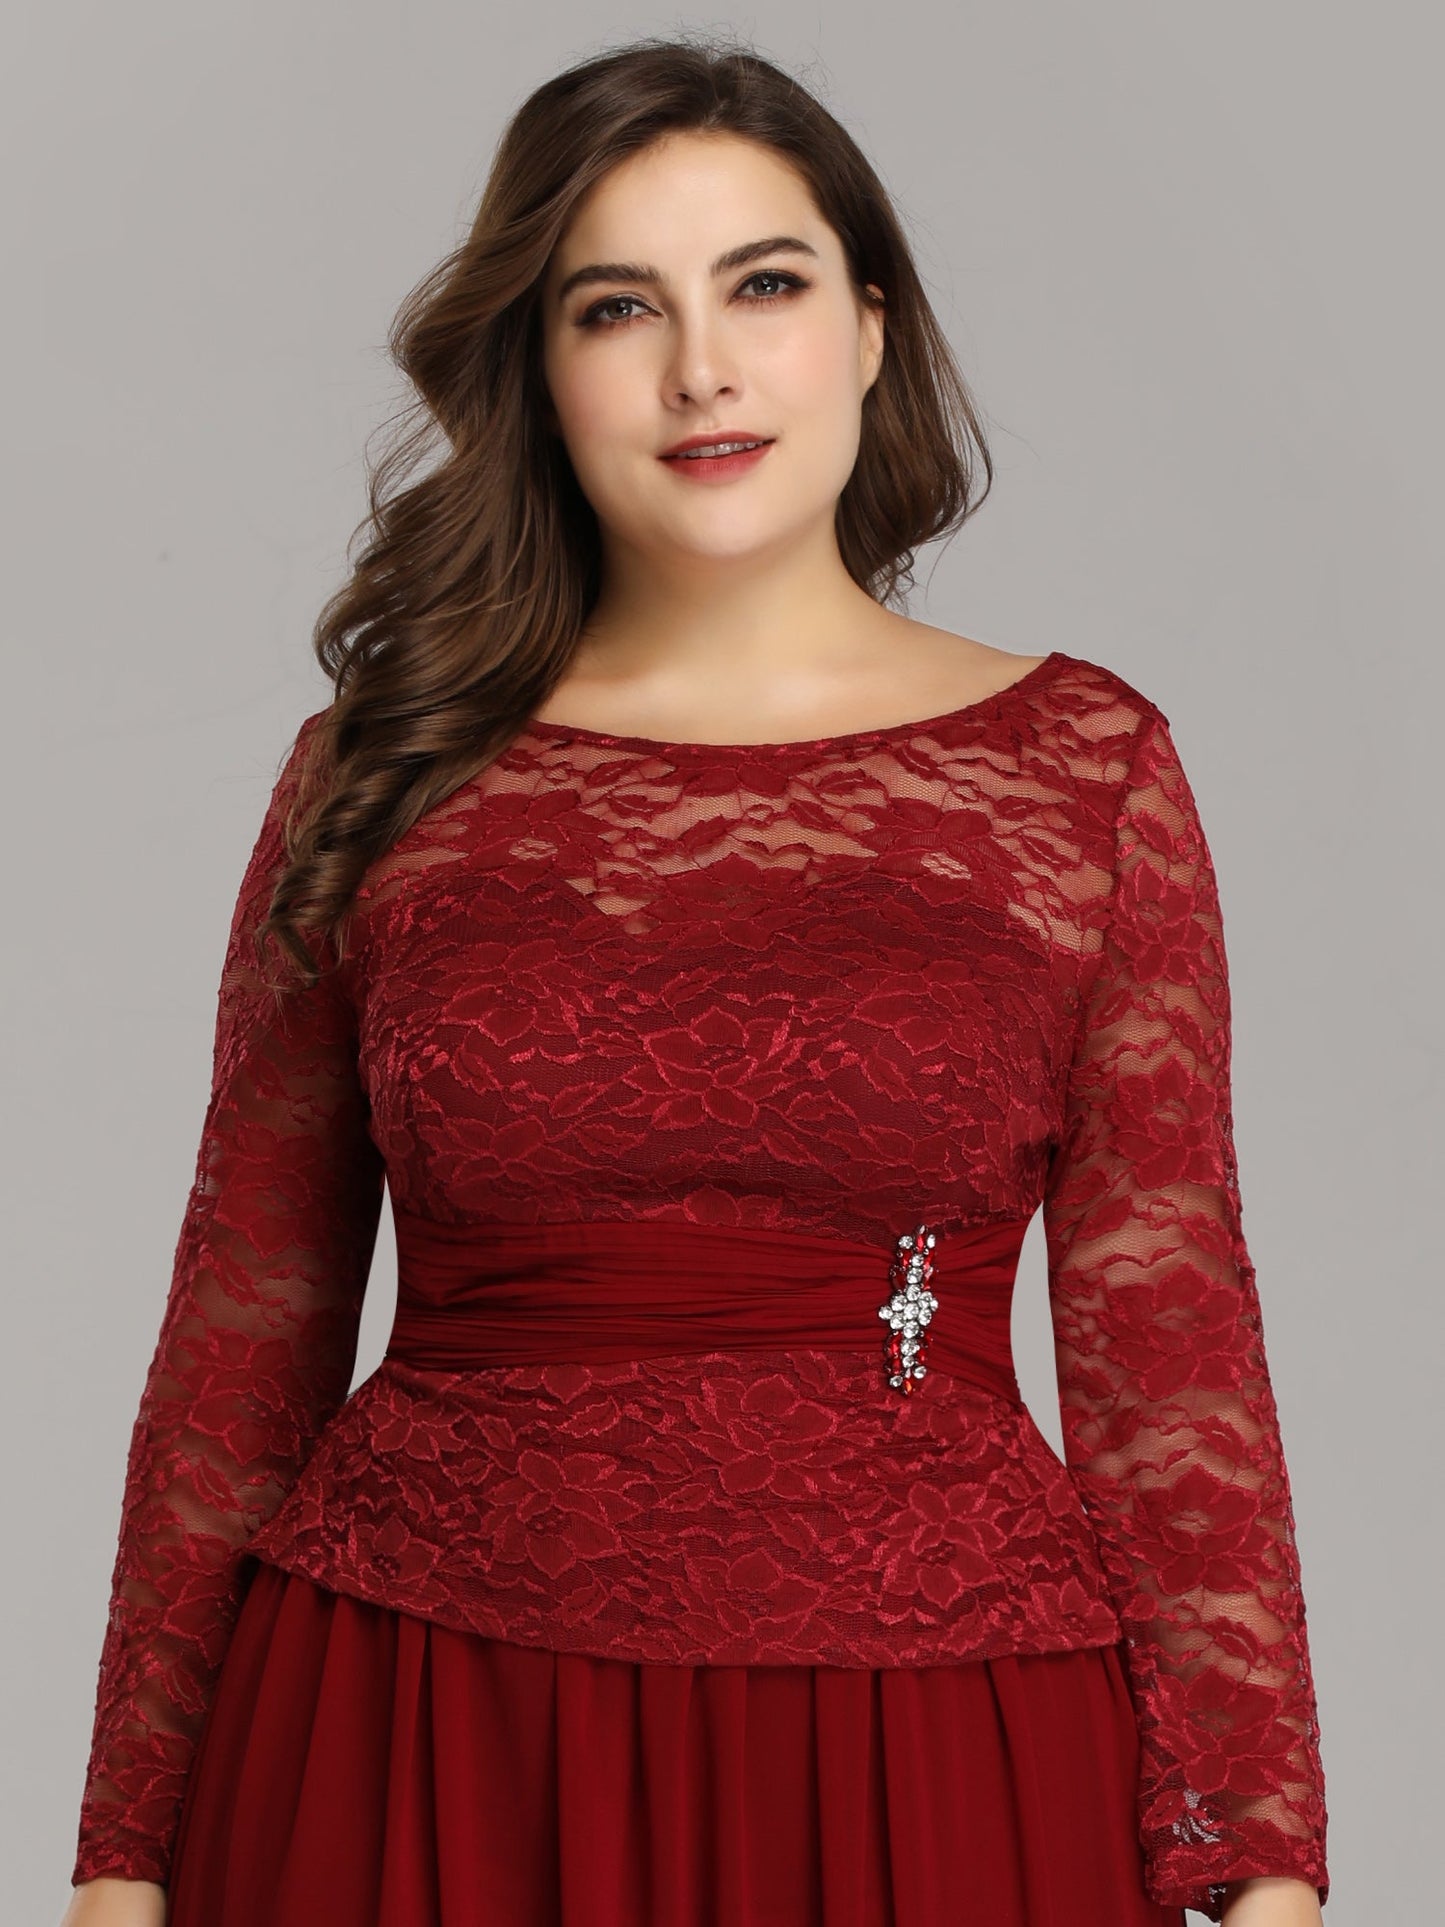 Long Sleeve Burgundy Lace Dresses for Women